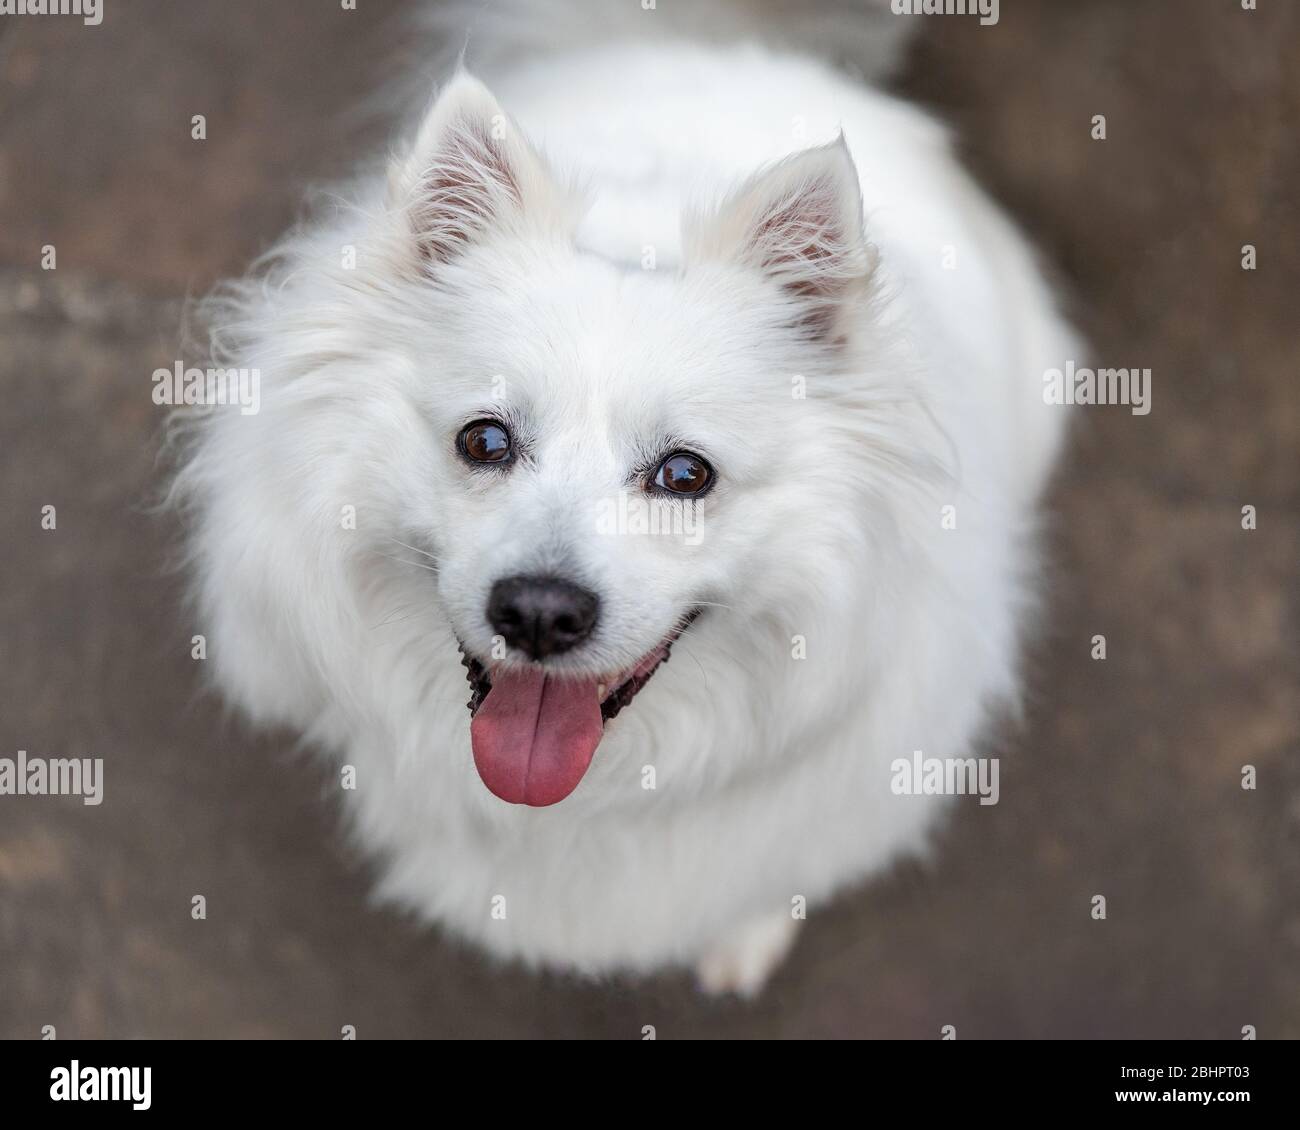 A white pomeranian dog Stock Photo